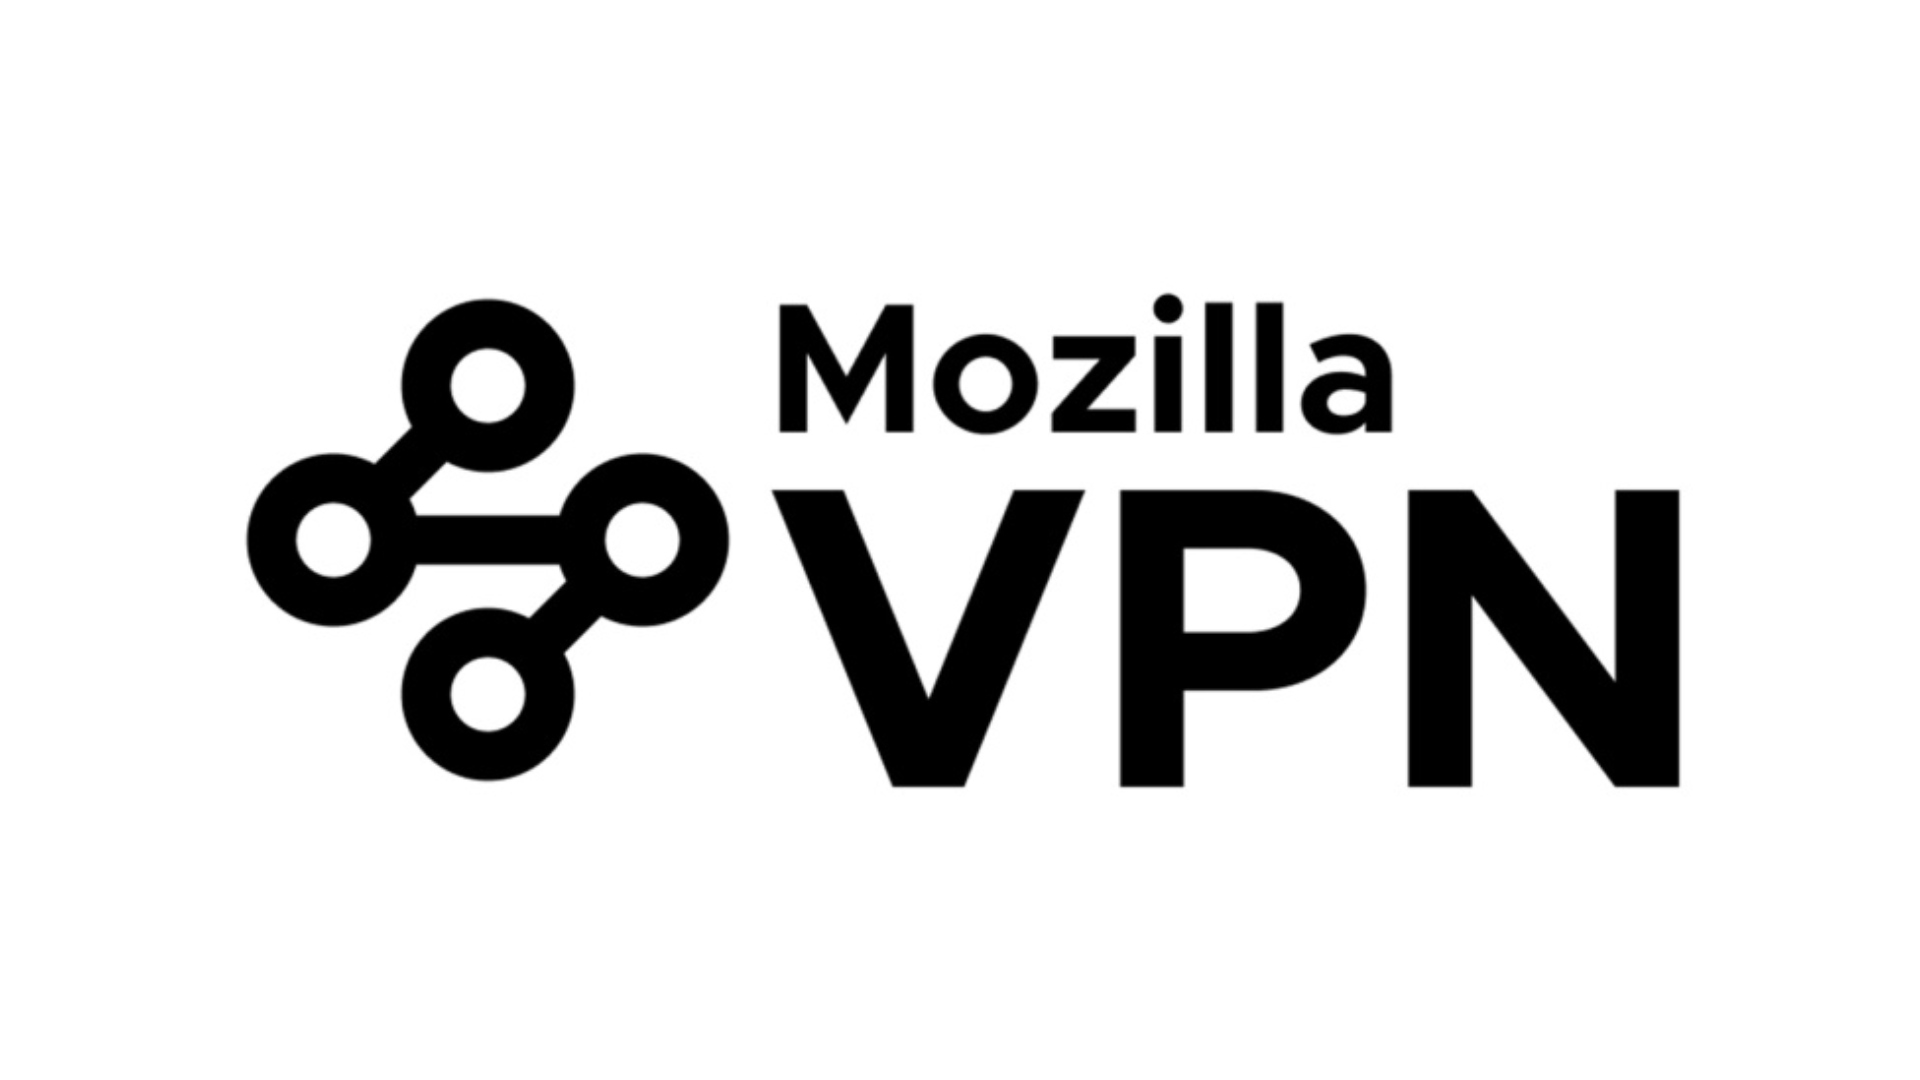 Best Firefox VPN: Mozilla VPN. Image shows the company logo.